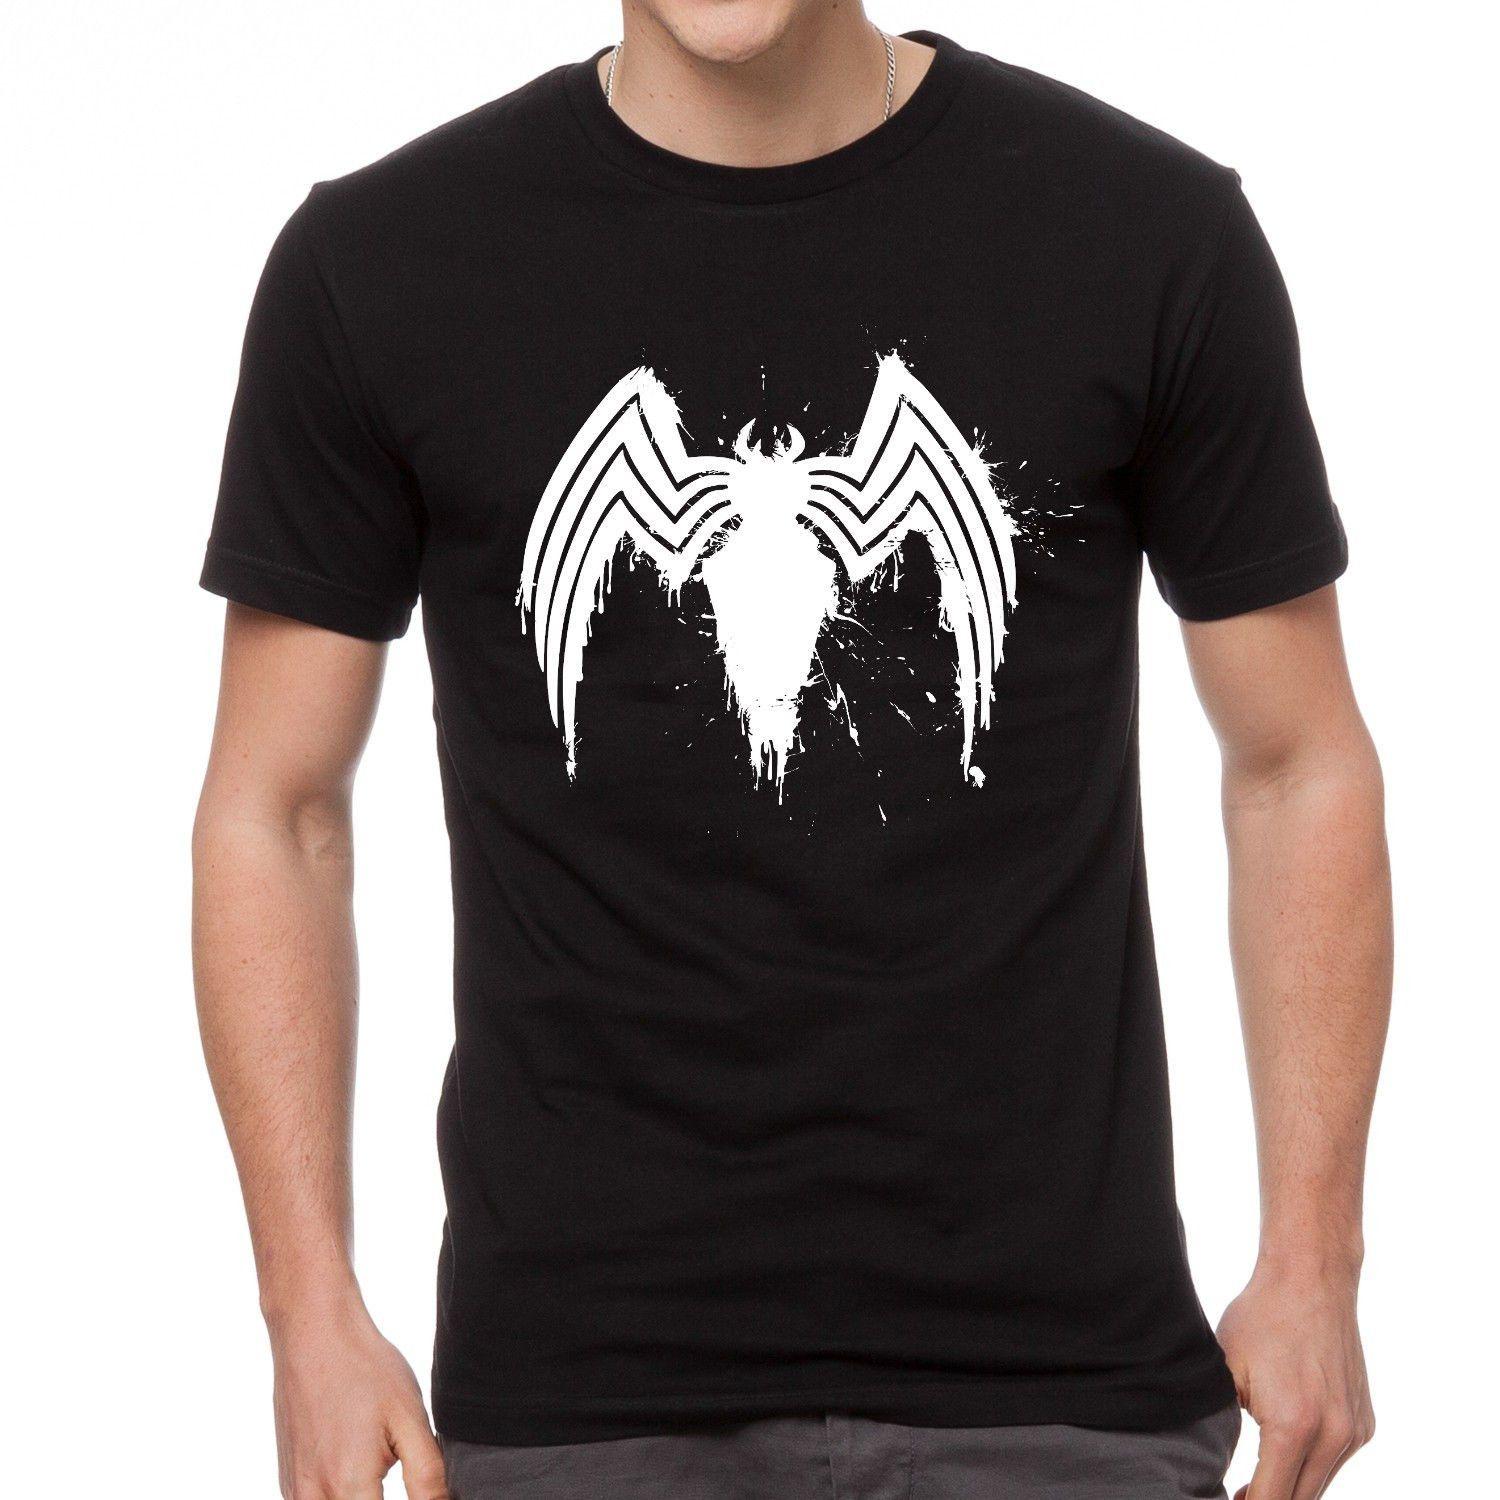 Symbiote Logo - US $10.18 48% OFF|VENOM symbiote logo 2018 movie film spiderman t shirt-in  T-Shirts from Men's Clothing on Aliexpress.com | Alibaba Group